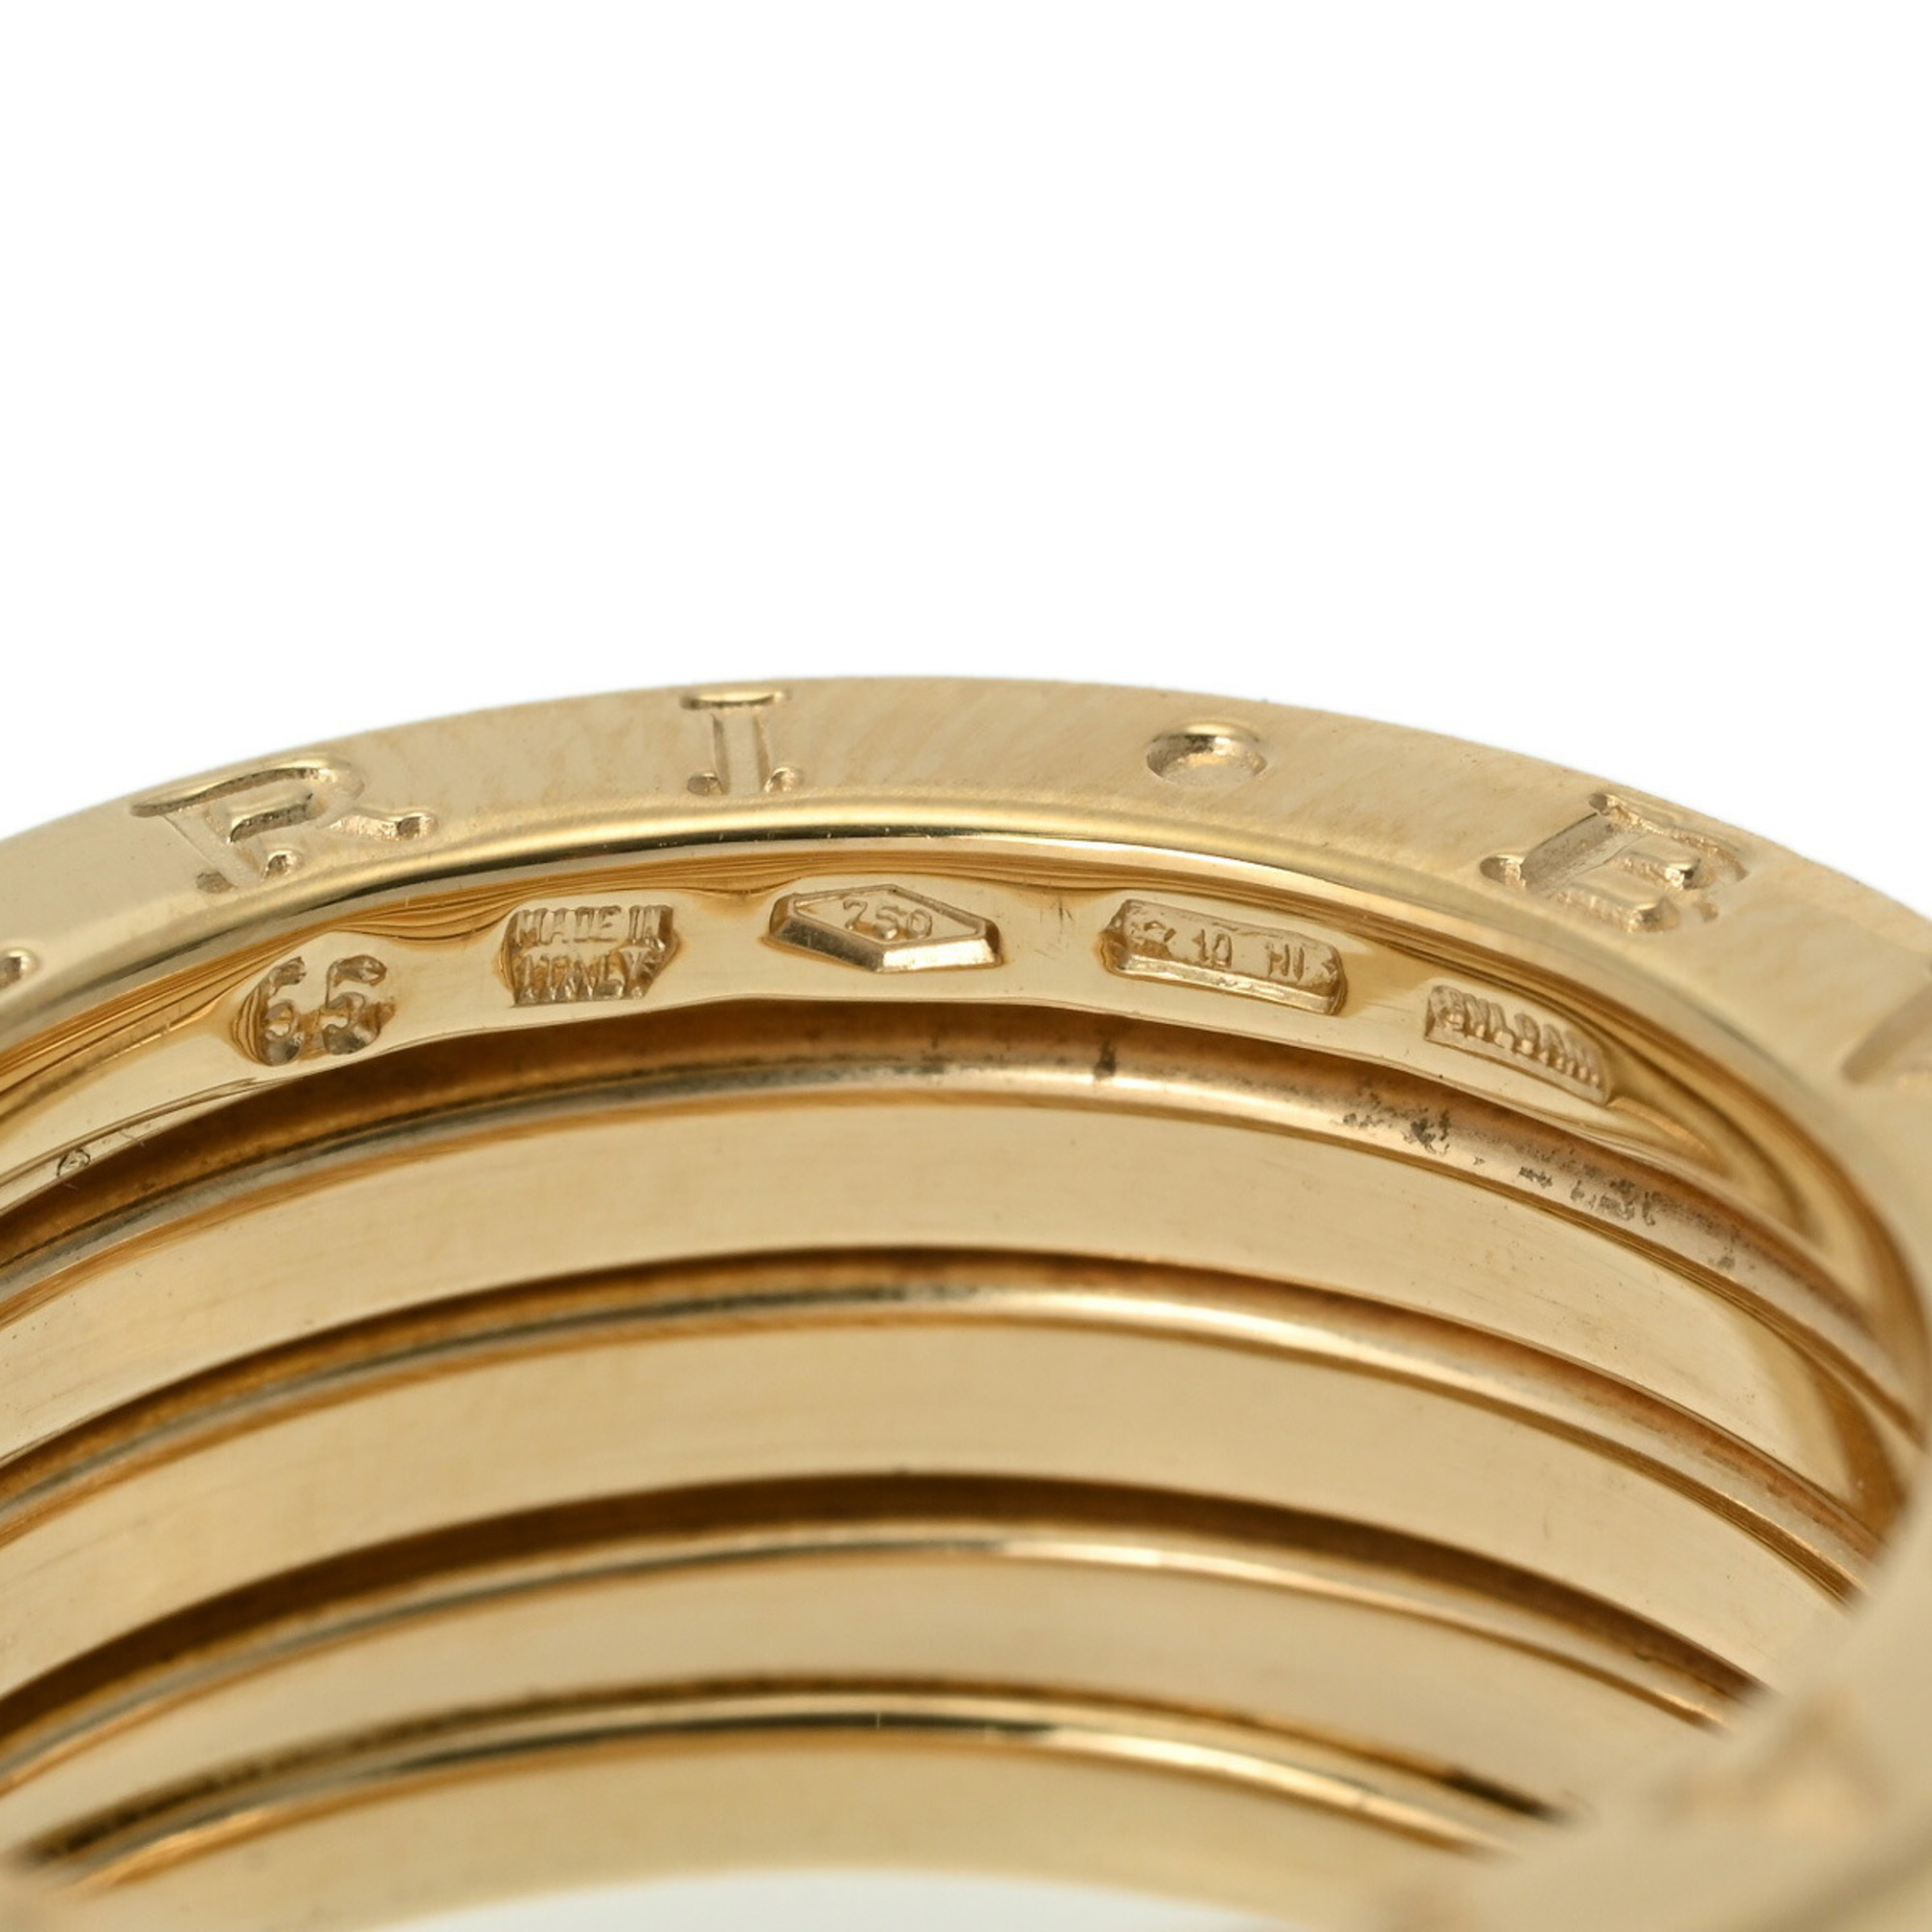 BVLGARI B-ZERO1 L size #55 - 14.5 Men's K18 yellow gold ring